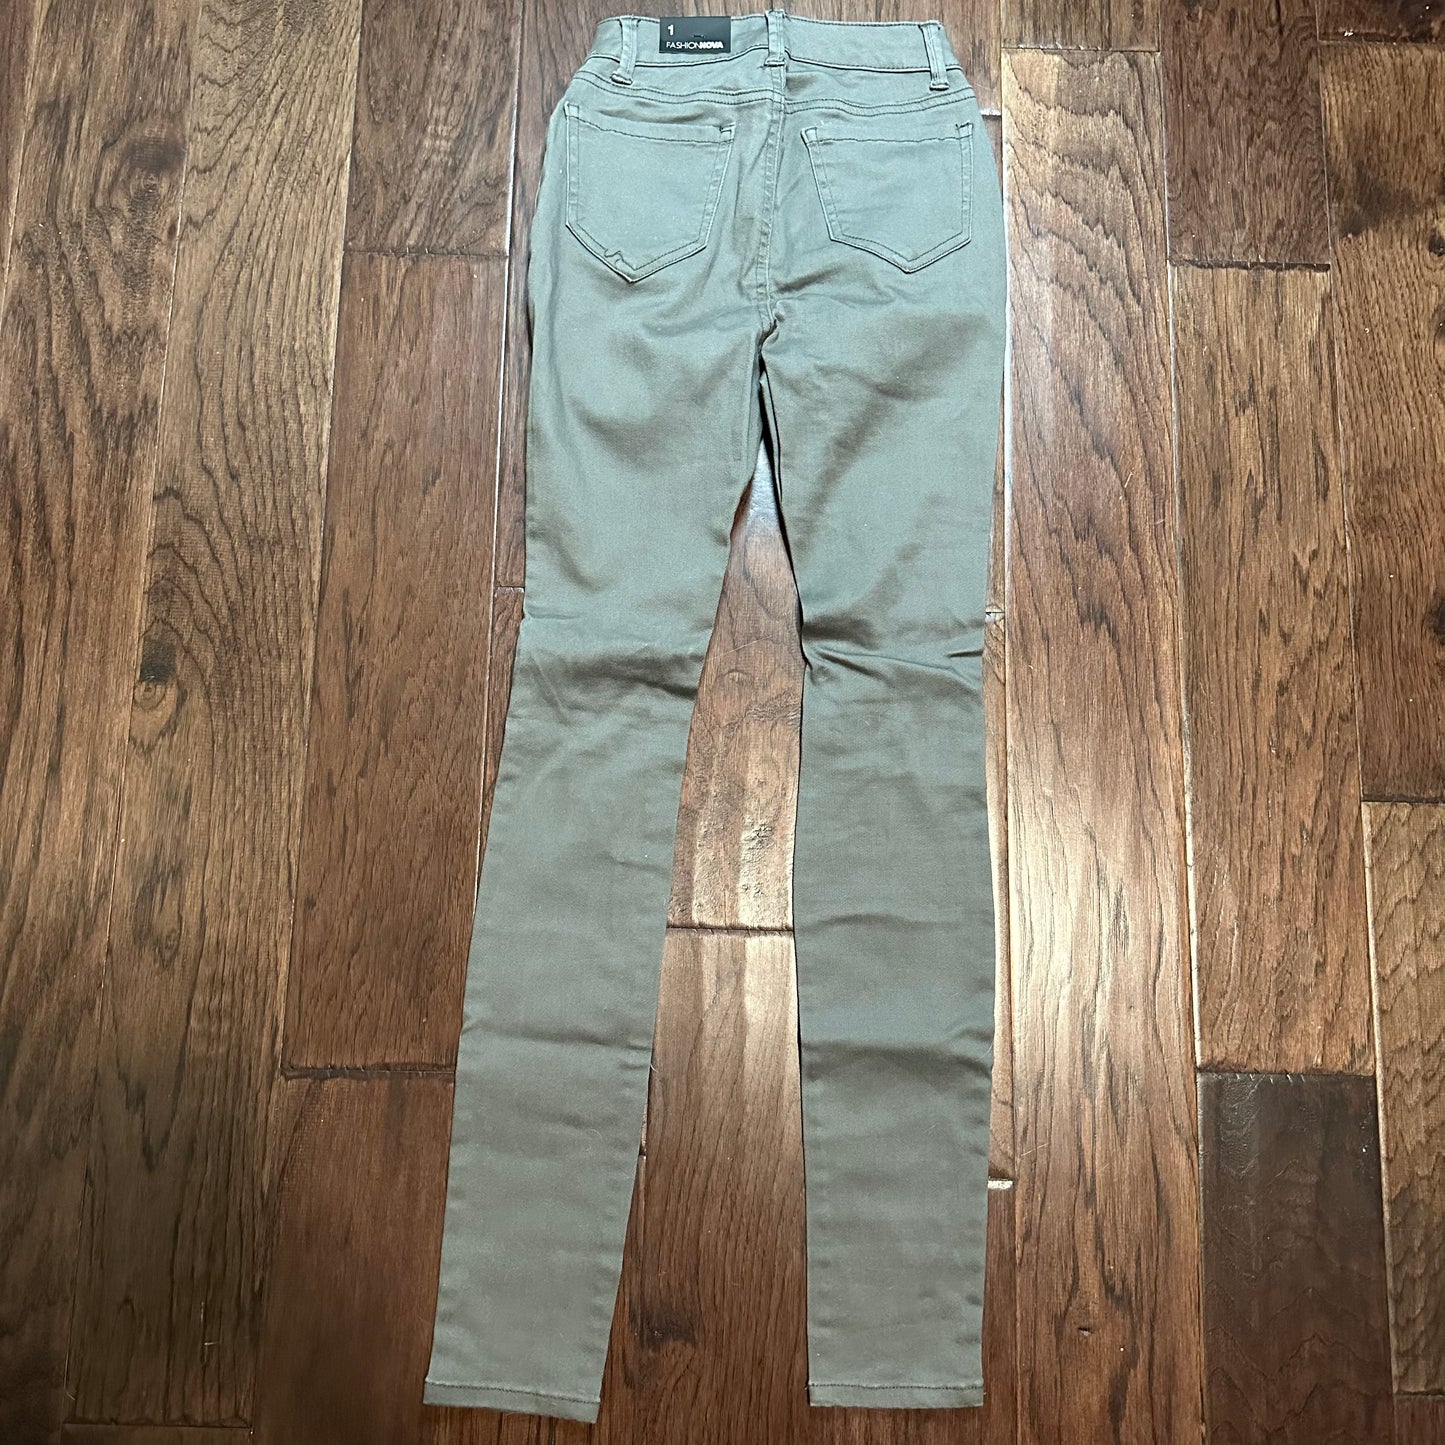 FashonNova Grey Pants - size 1